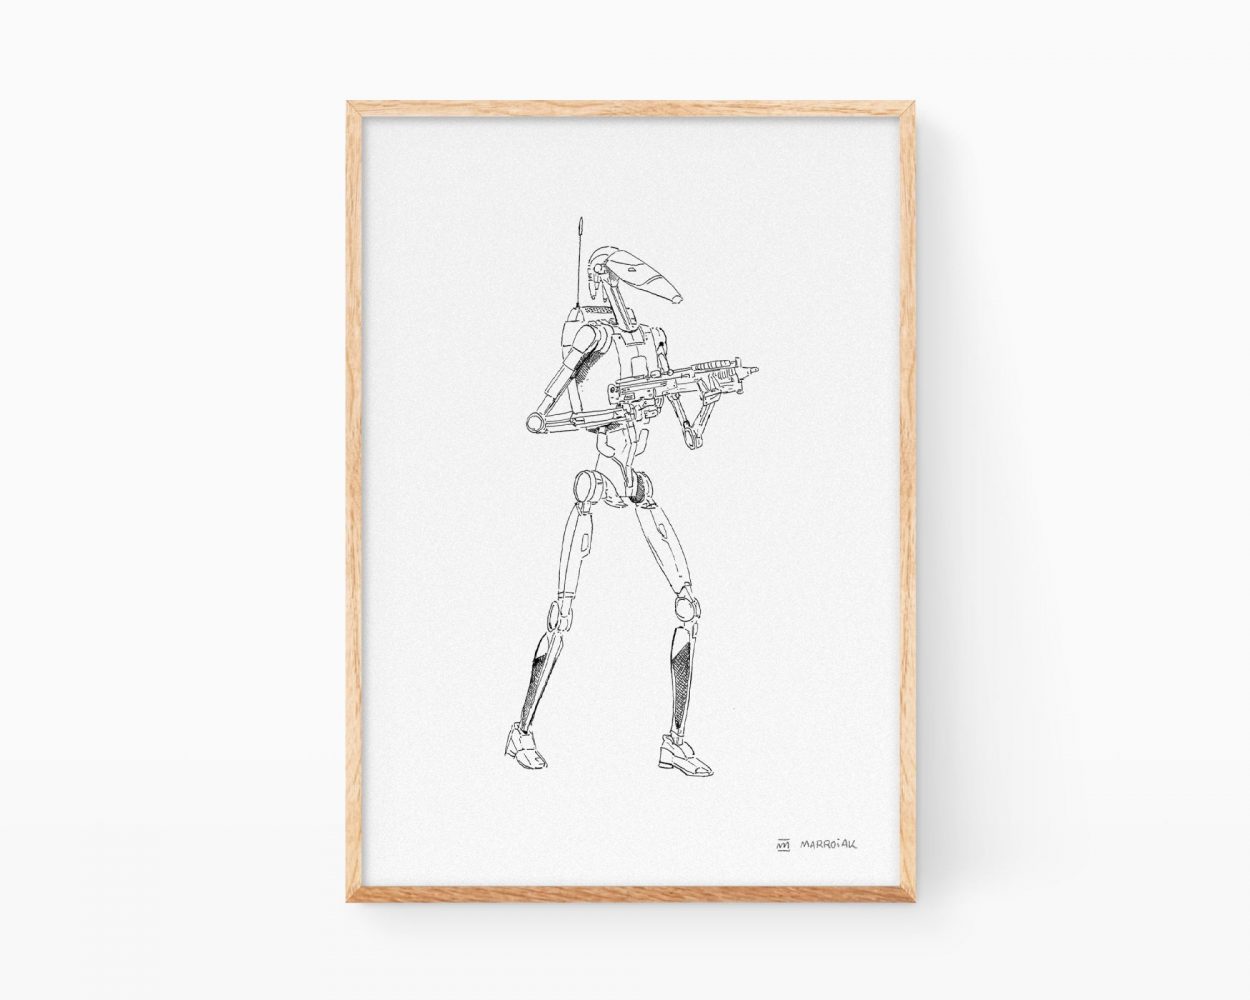 Lámina print Droide de combate B1 de la saga Star Wars dibujo blanco y negro. Poster de personajes de la Guerra de las Galaxias